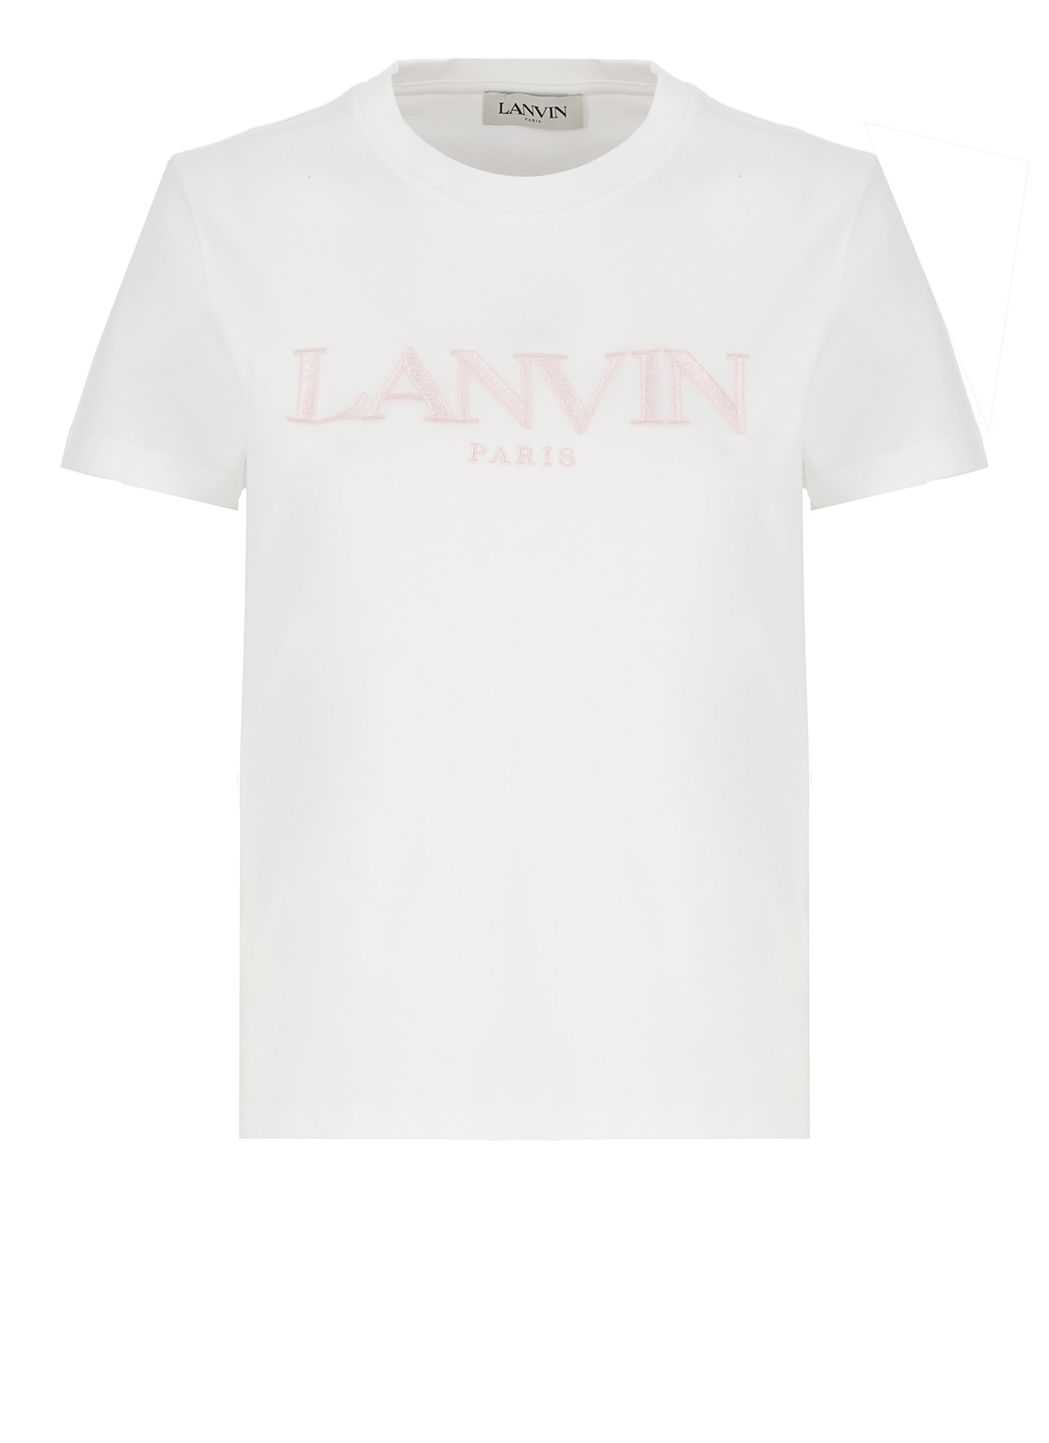 Cotton logoed t-shirt